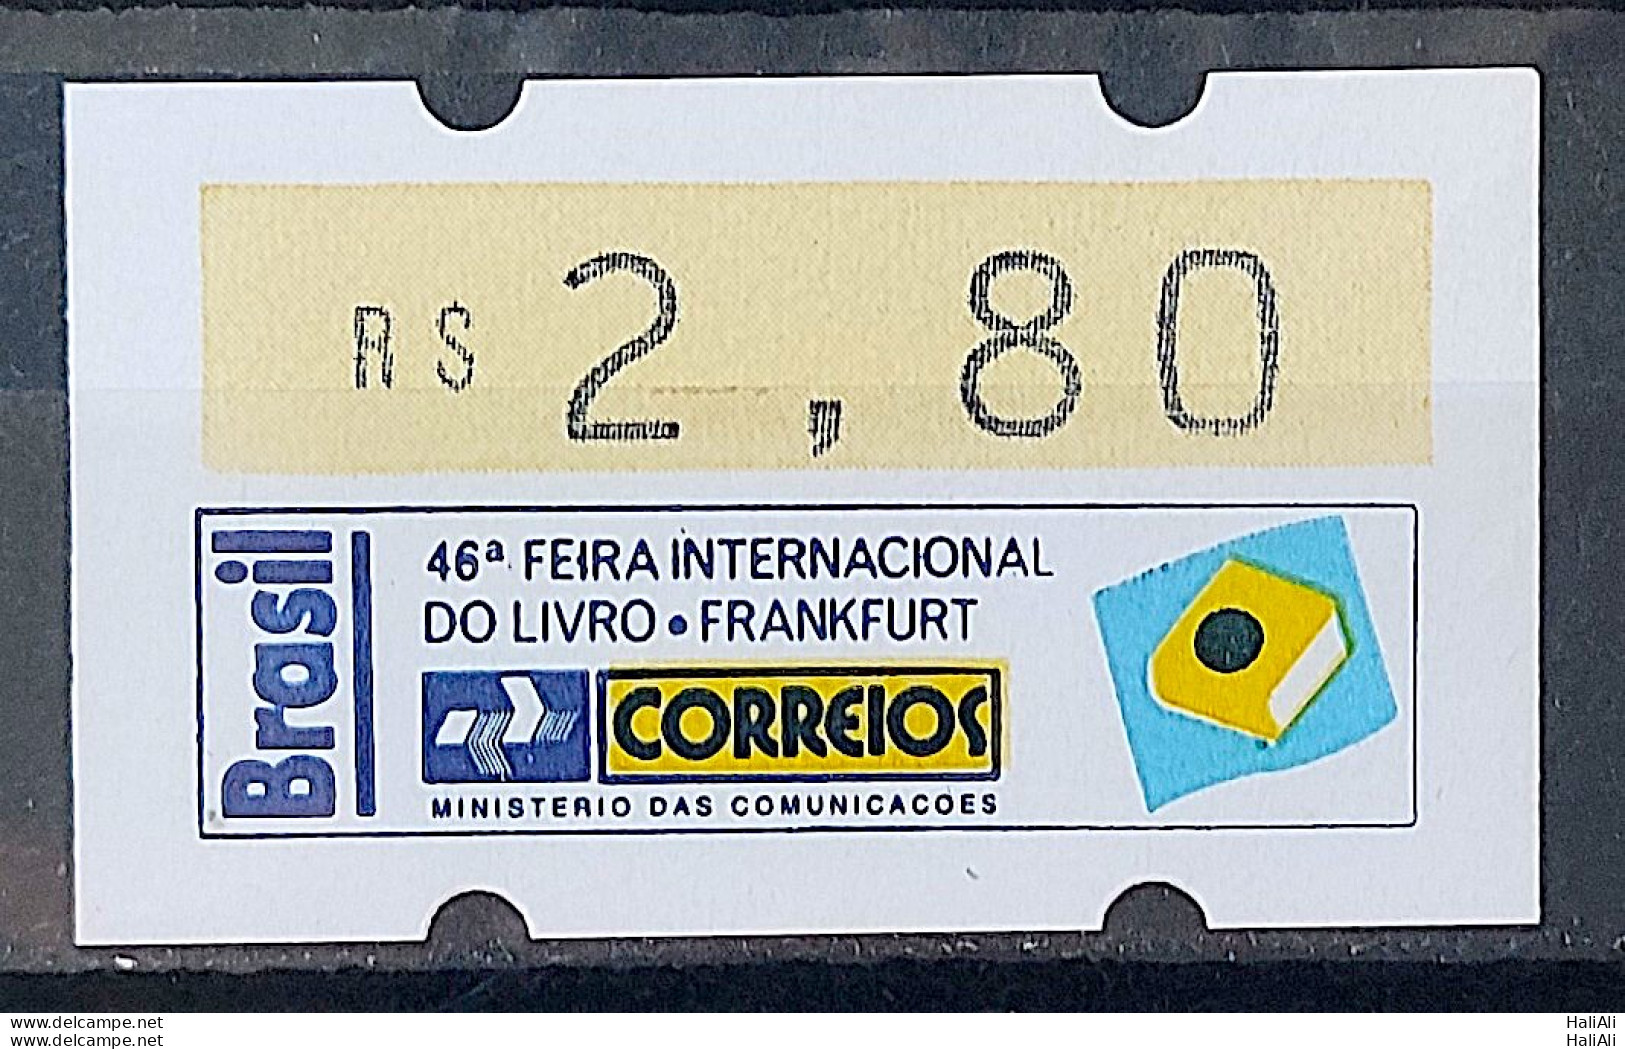 SE 06C Brazil Stamp Label Etiqueta Etichetta Automato Frankfurt 1994 - Frankeervignetten (Frama)